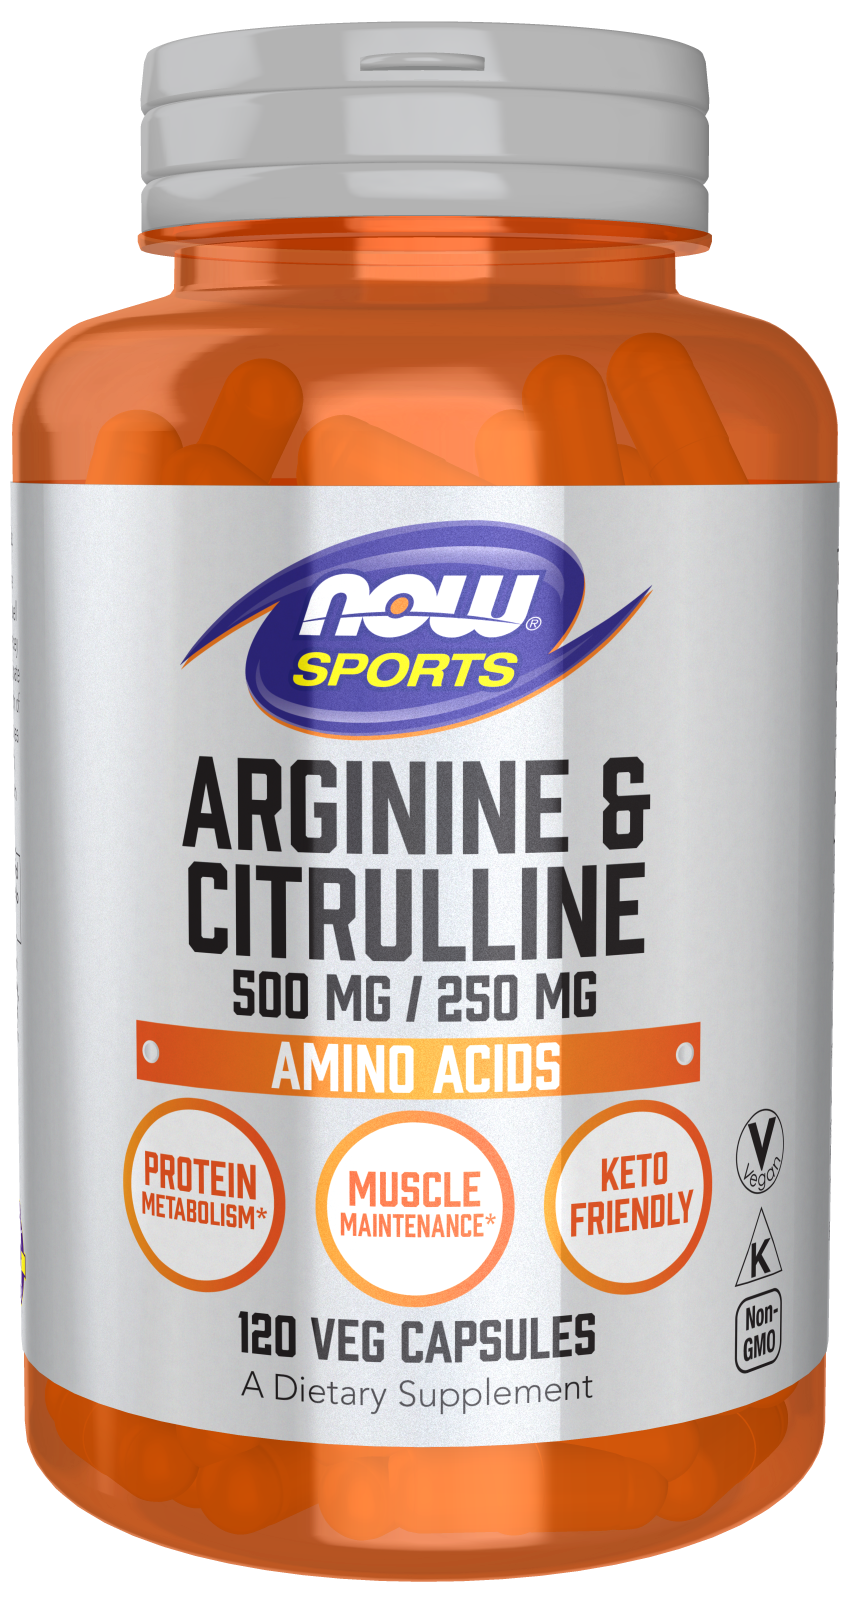 Now Foods Arginine & Citrulline 500 mg / 250 mg - 120 Veg Capsules